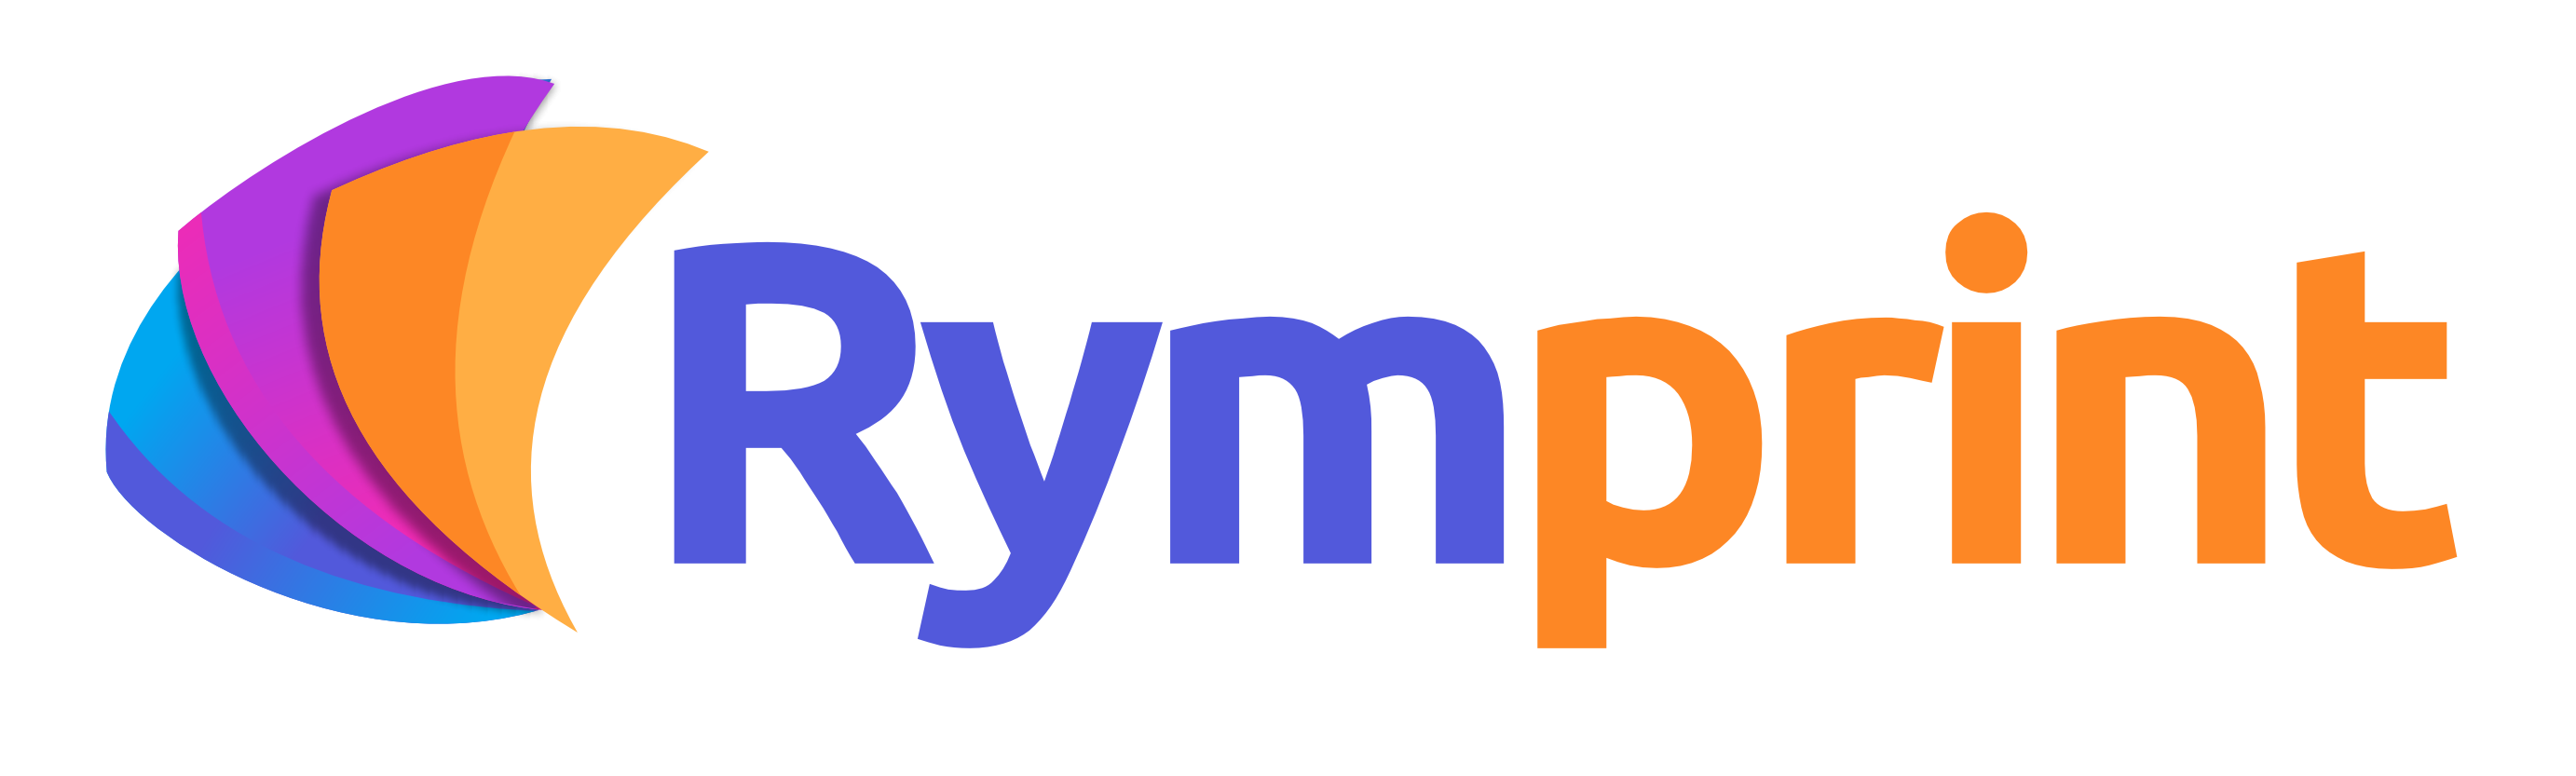 Rymprint #One T-shirts  Sales and printing Shop